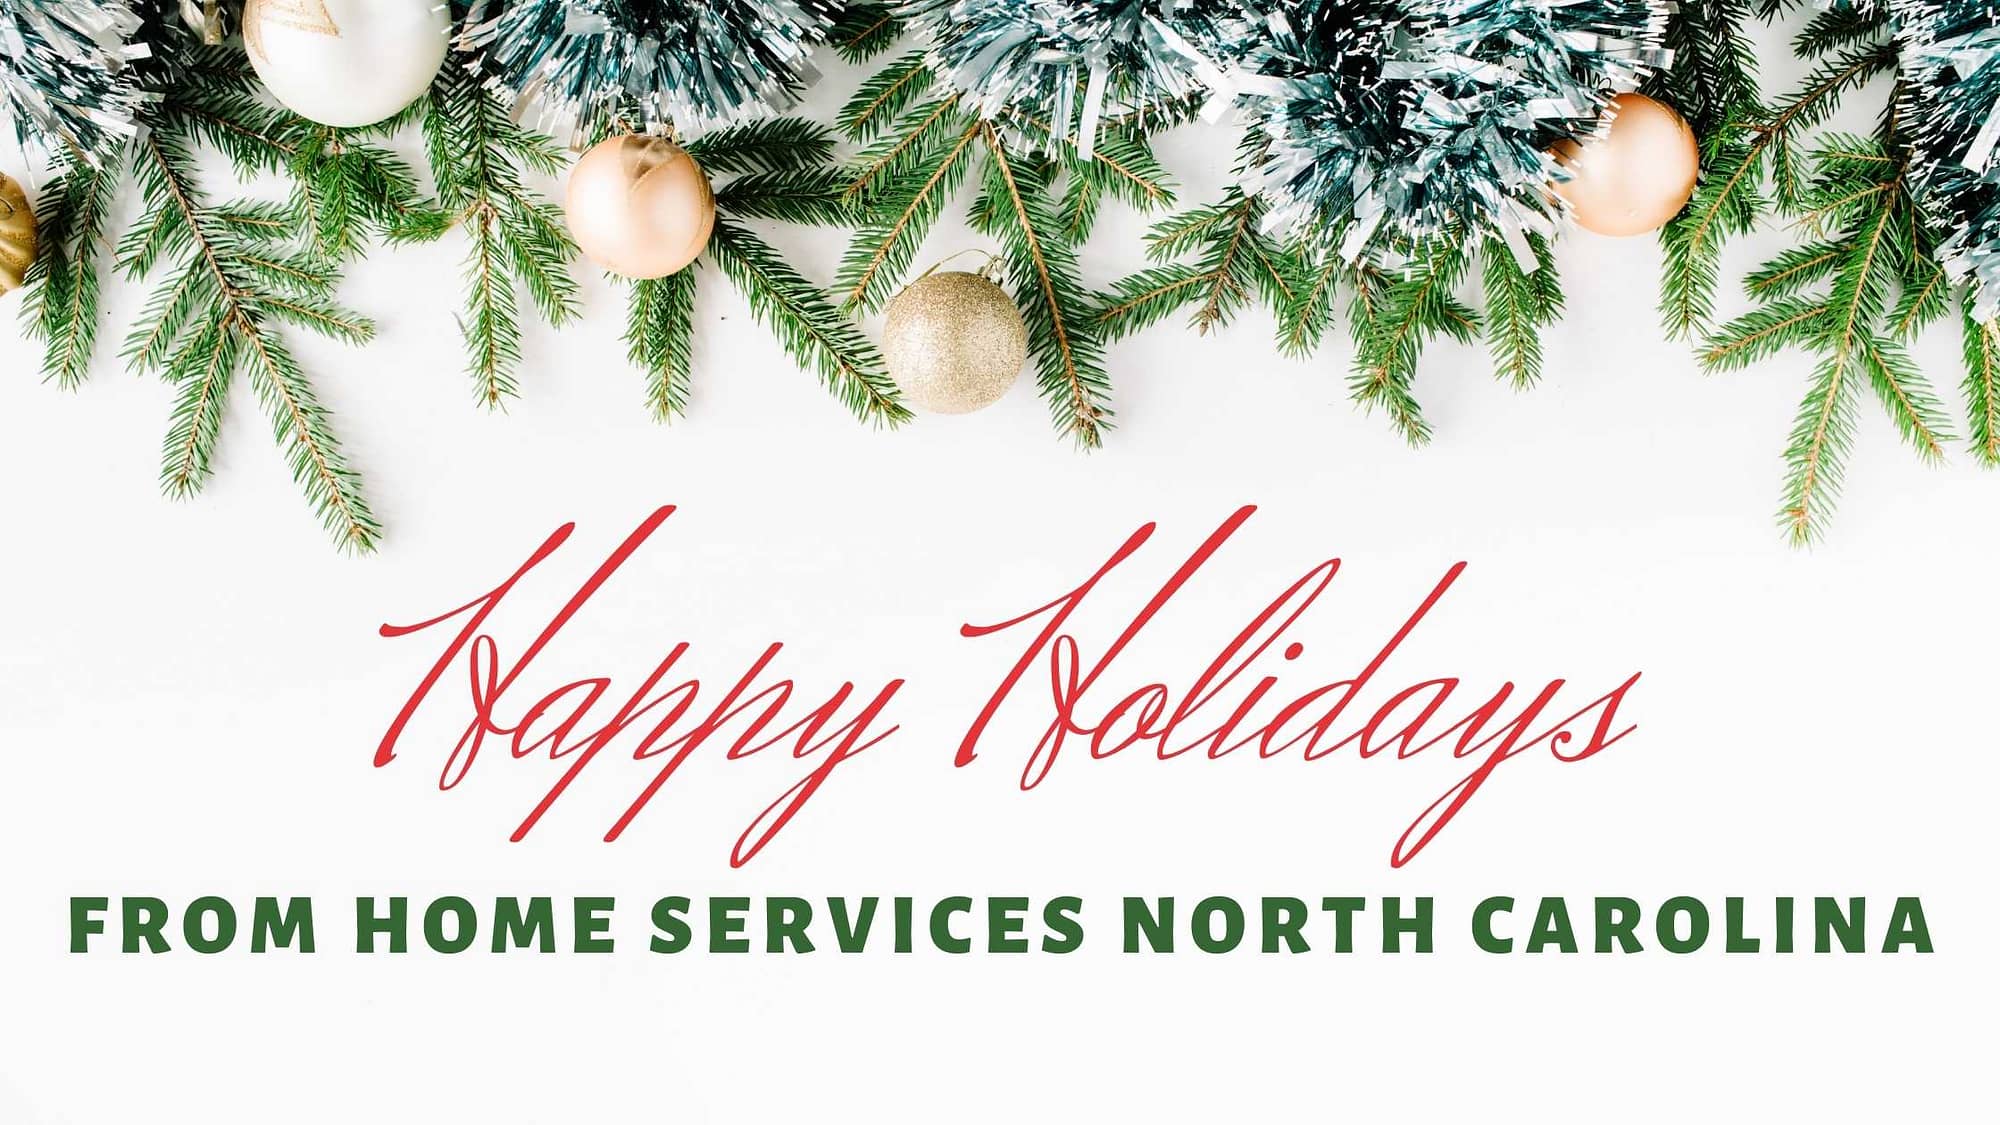 Home Services North Carolina